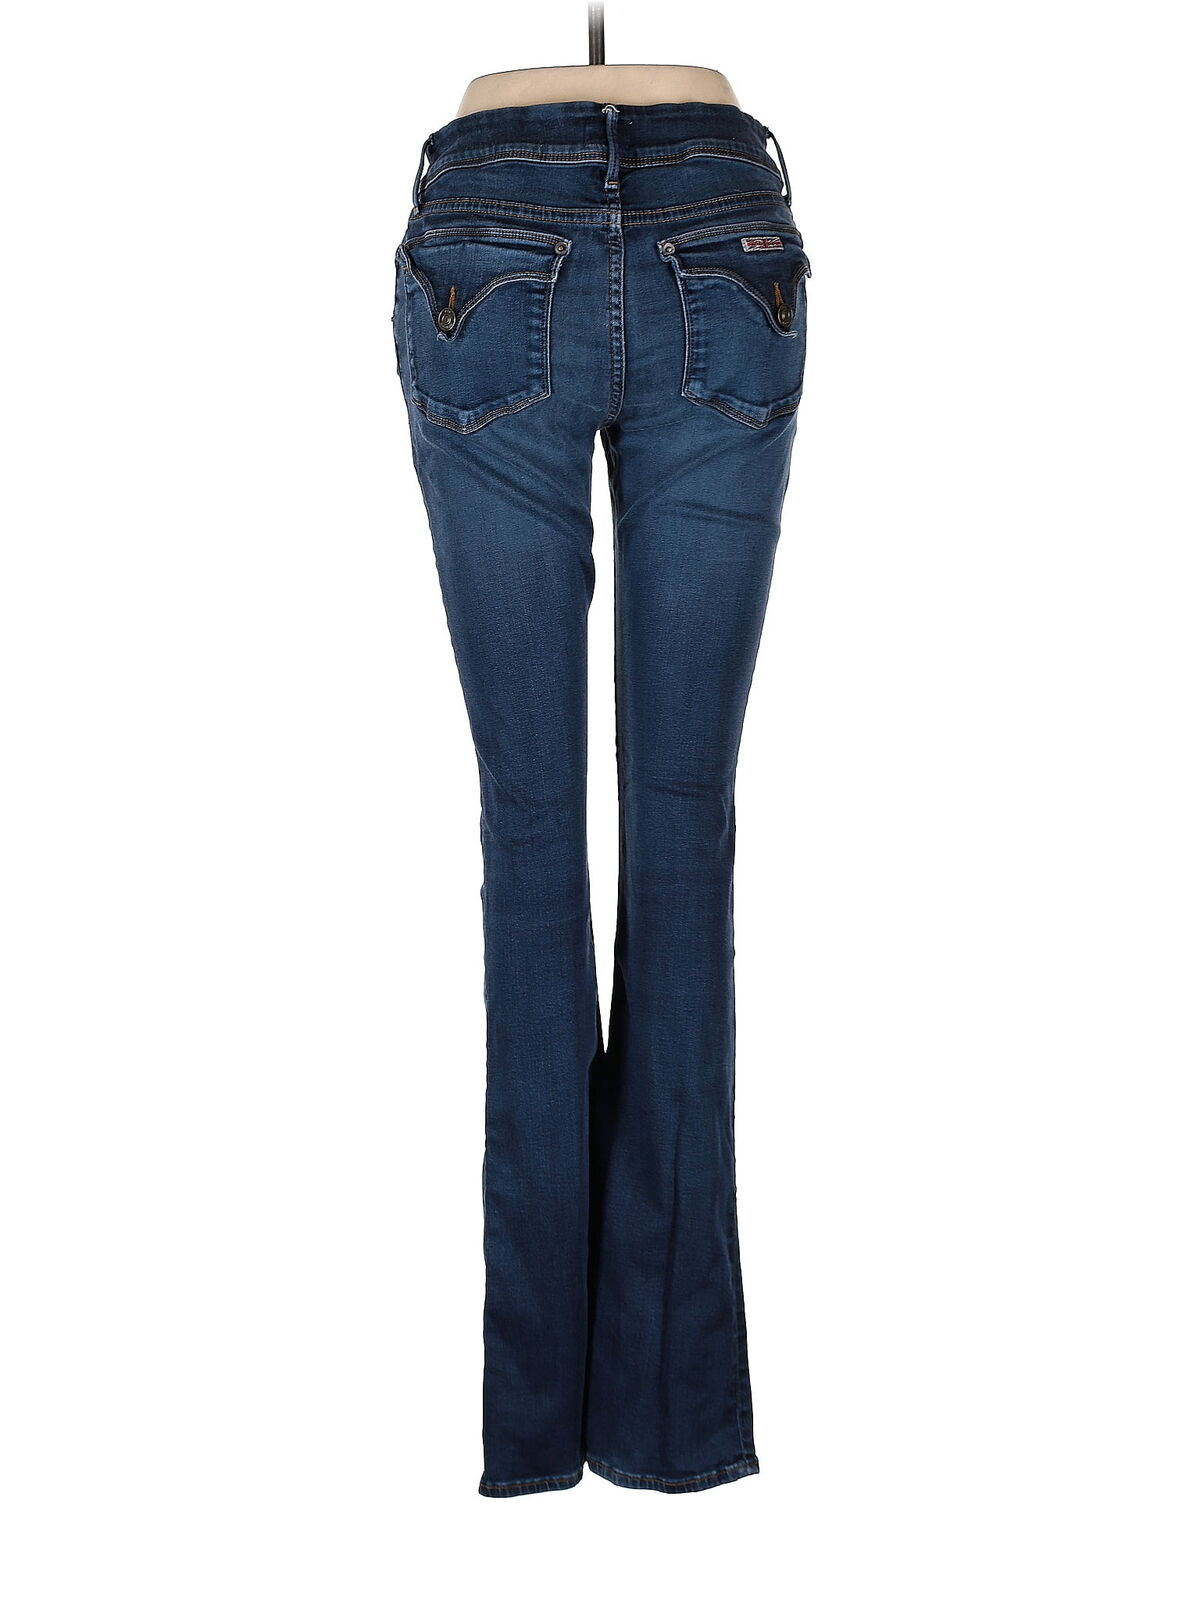 Hudson Jeans Women Blue Jeans 29W - image 2